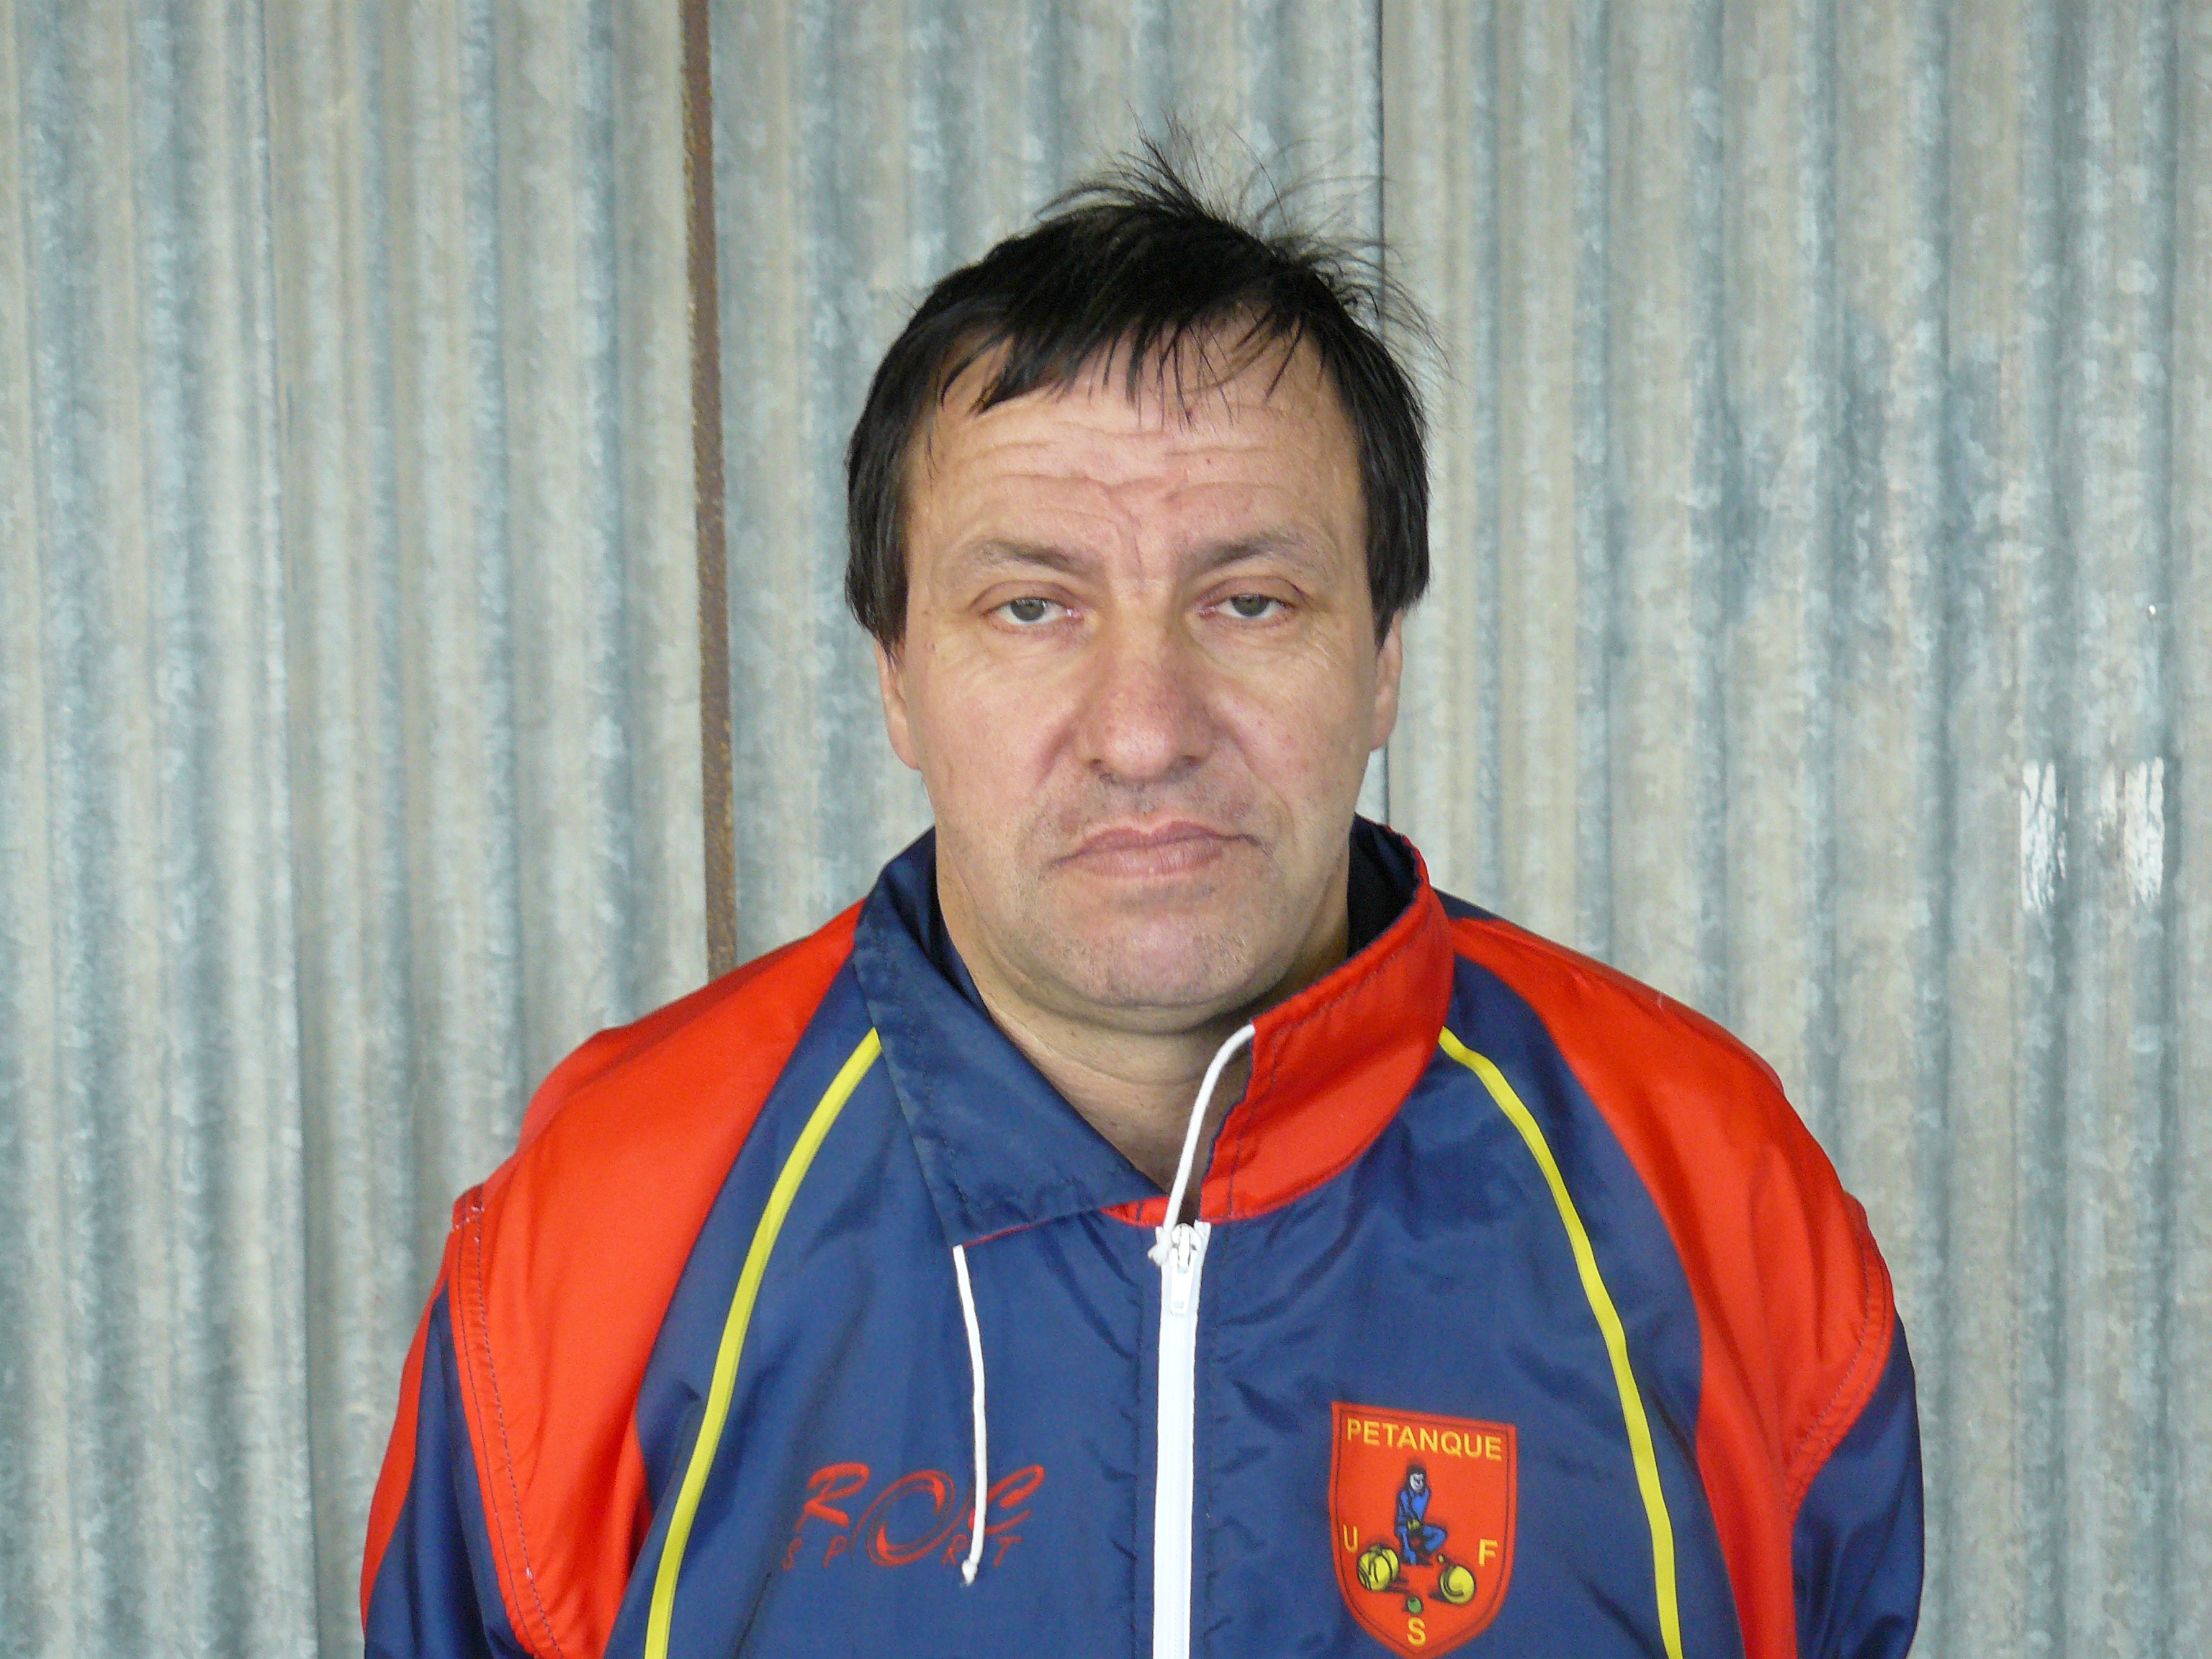 Didier coach de la cinquième division